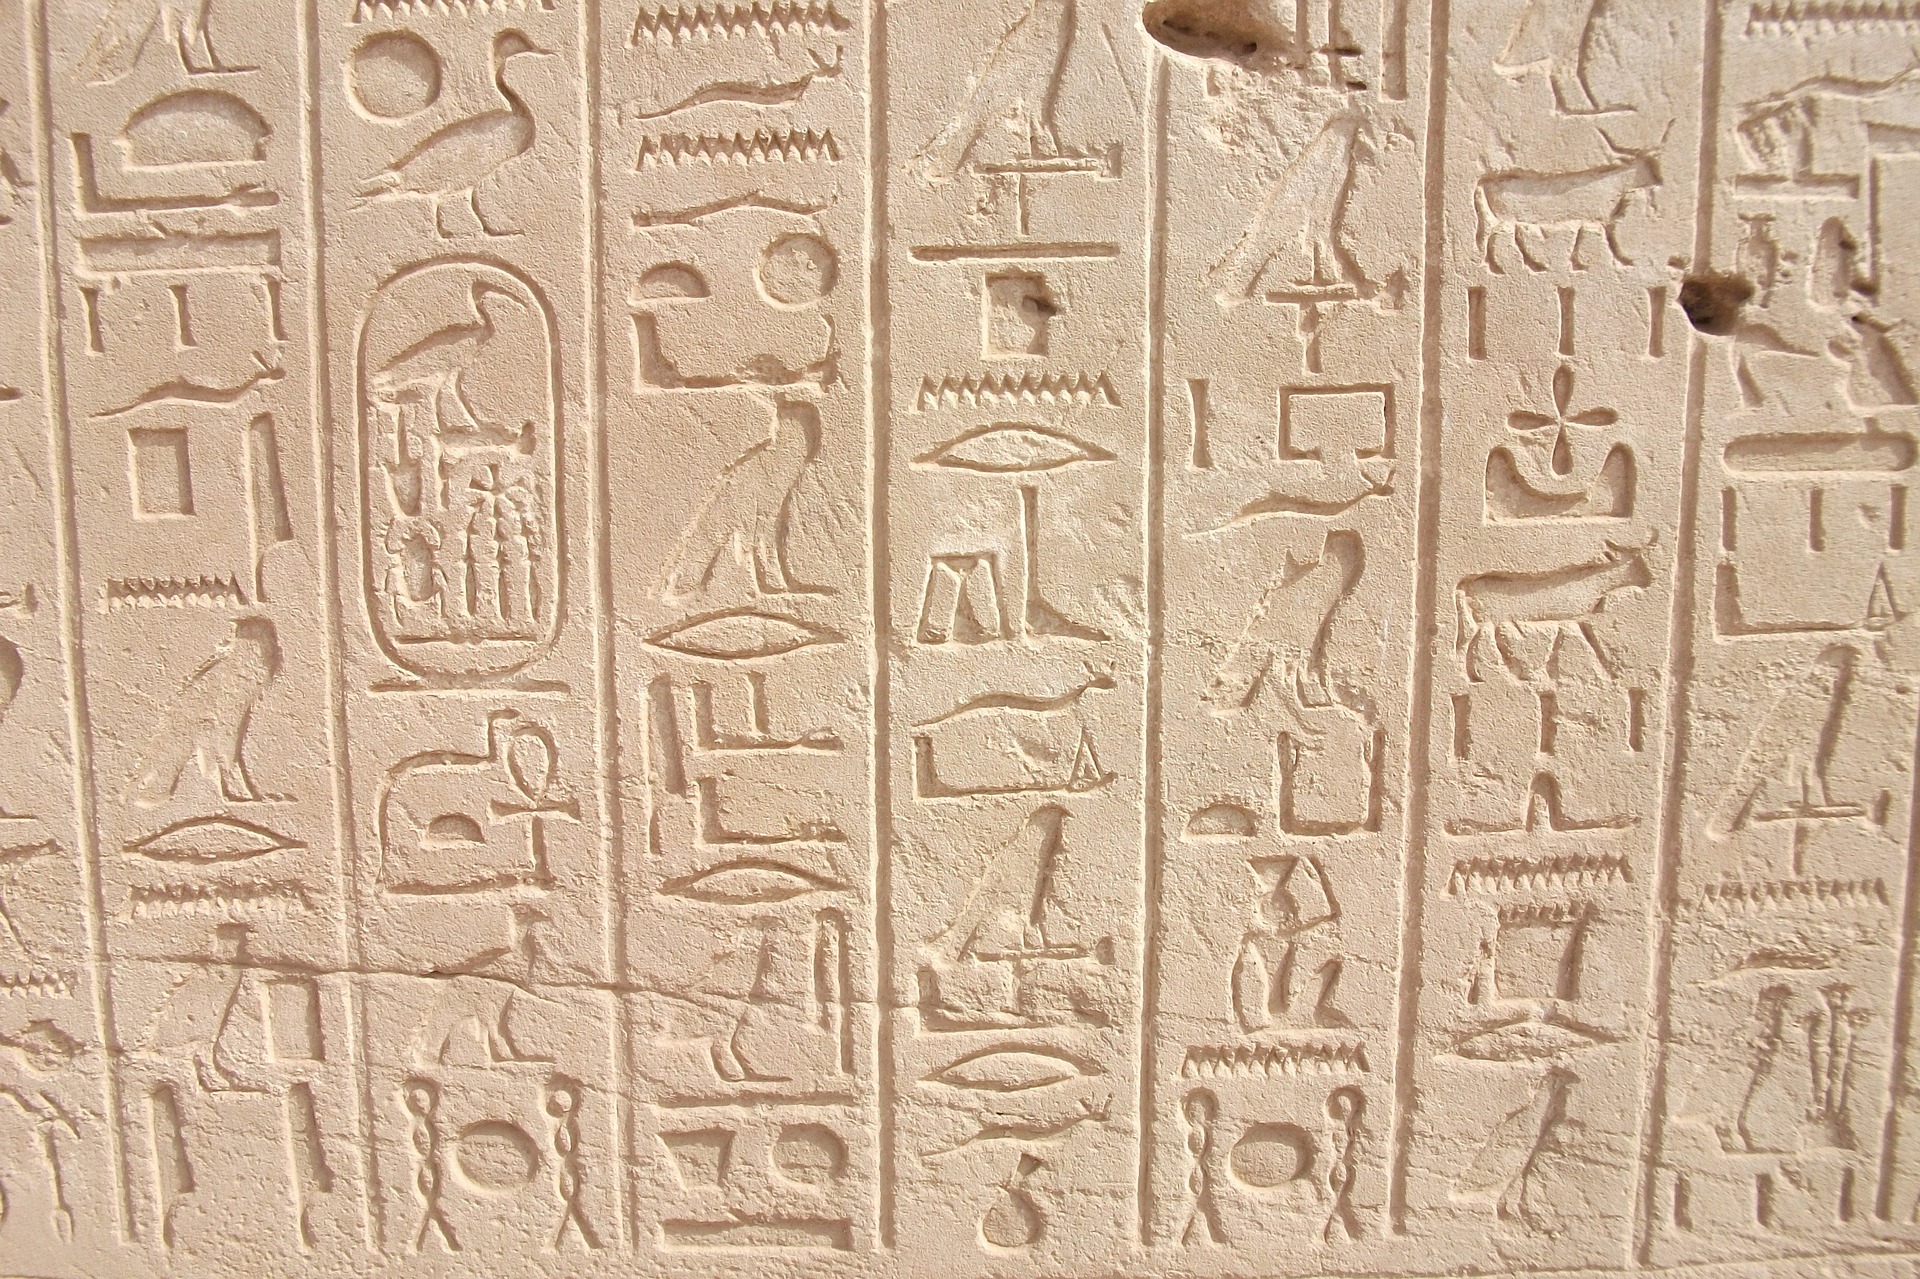 hieroglyphics-429863_1920